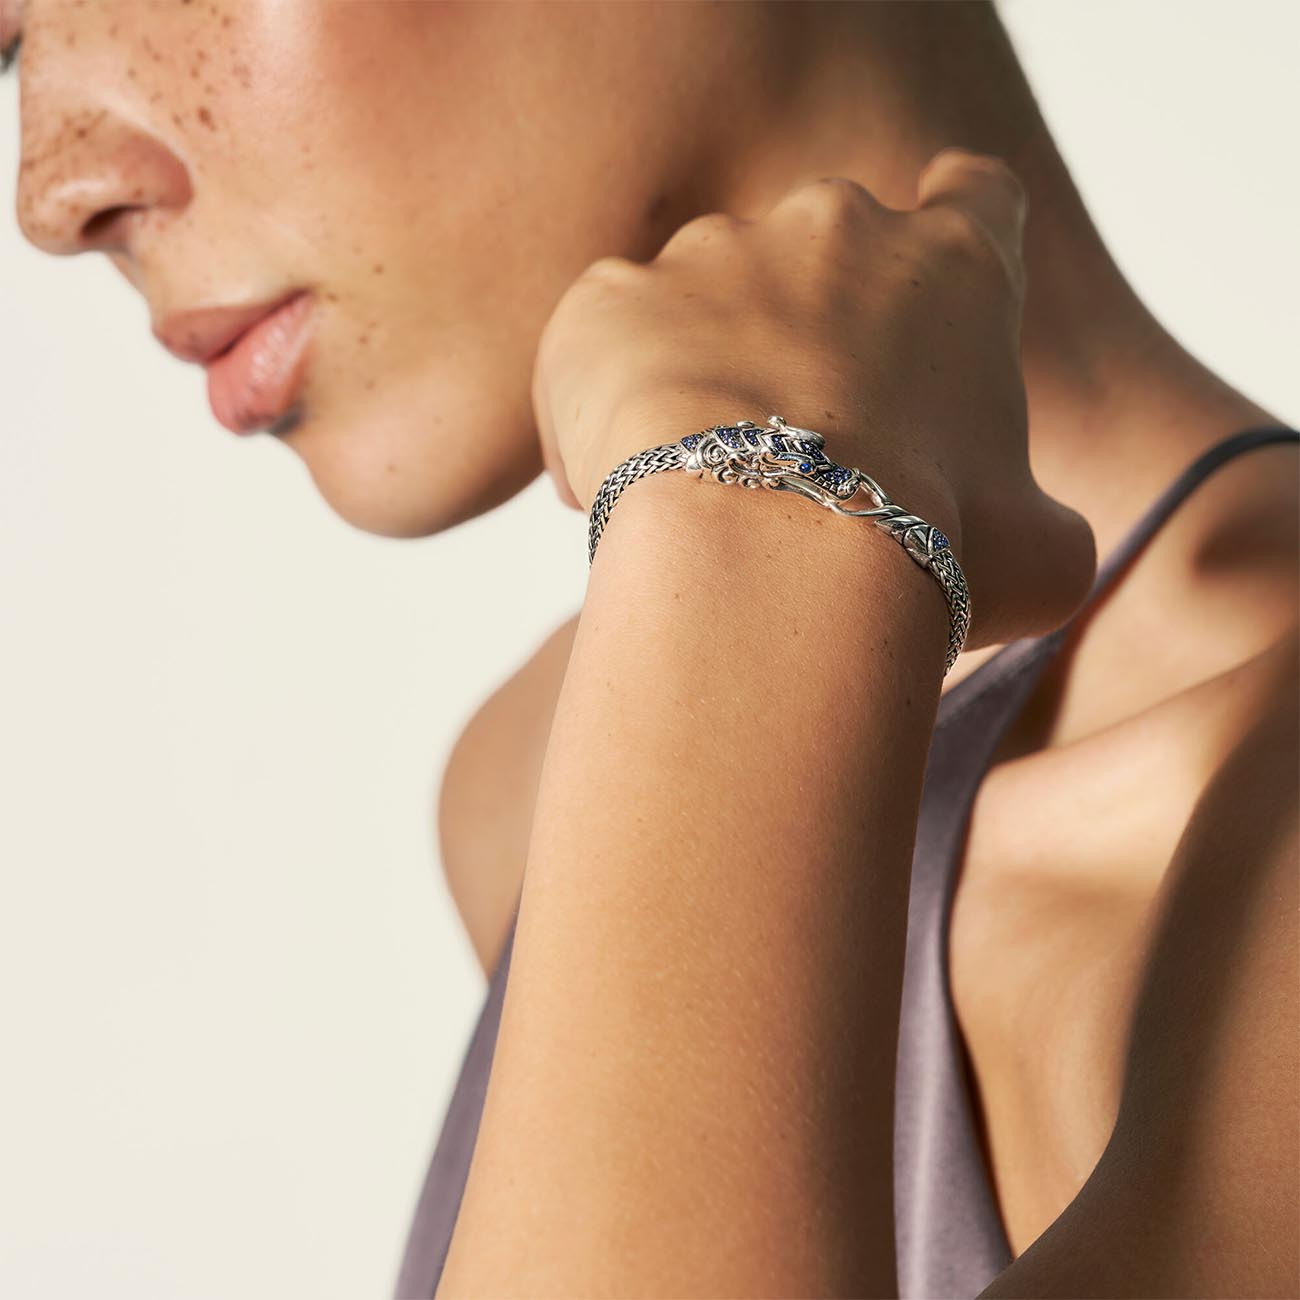 10MM Blue Sapphire Bracelet Top Quality,7.5'' length • Natural Sapphir –  GARNET IMPEX USA